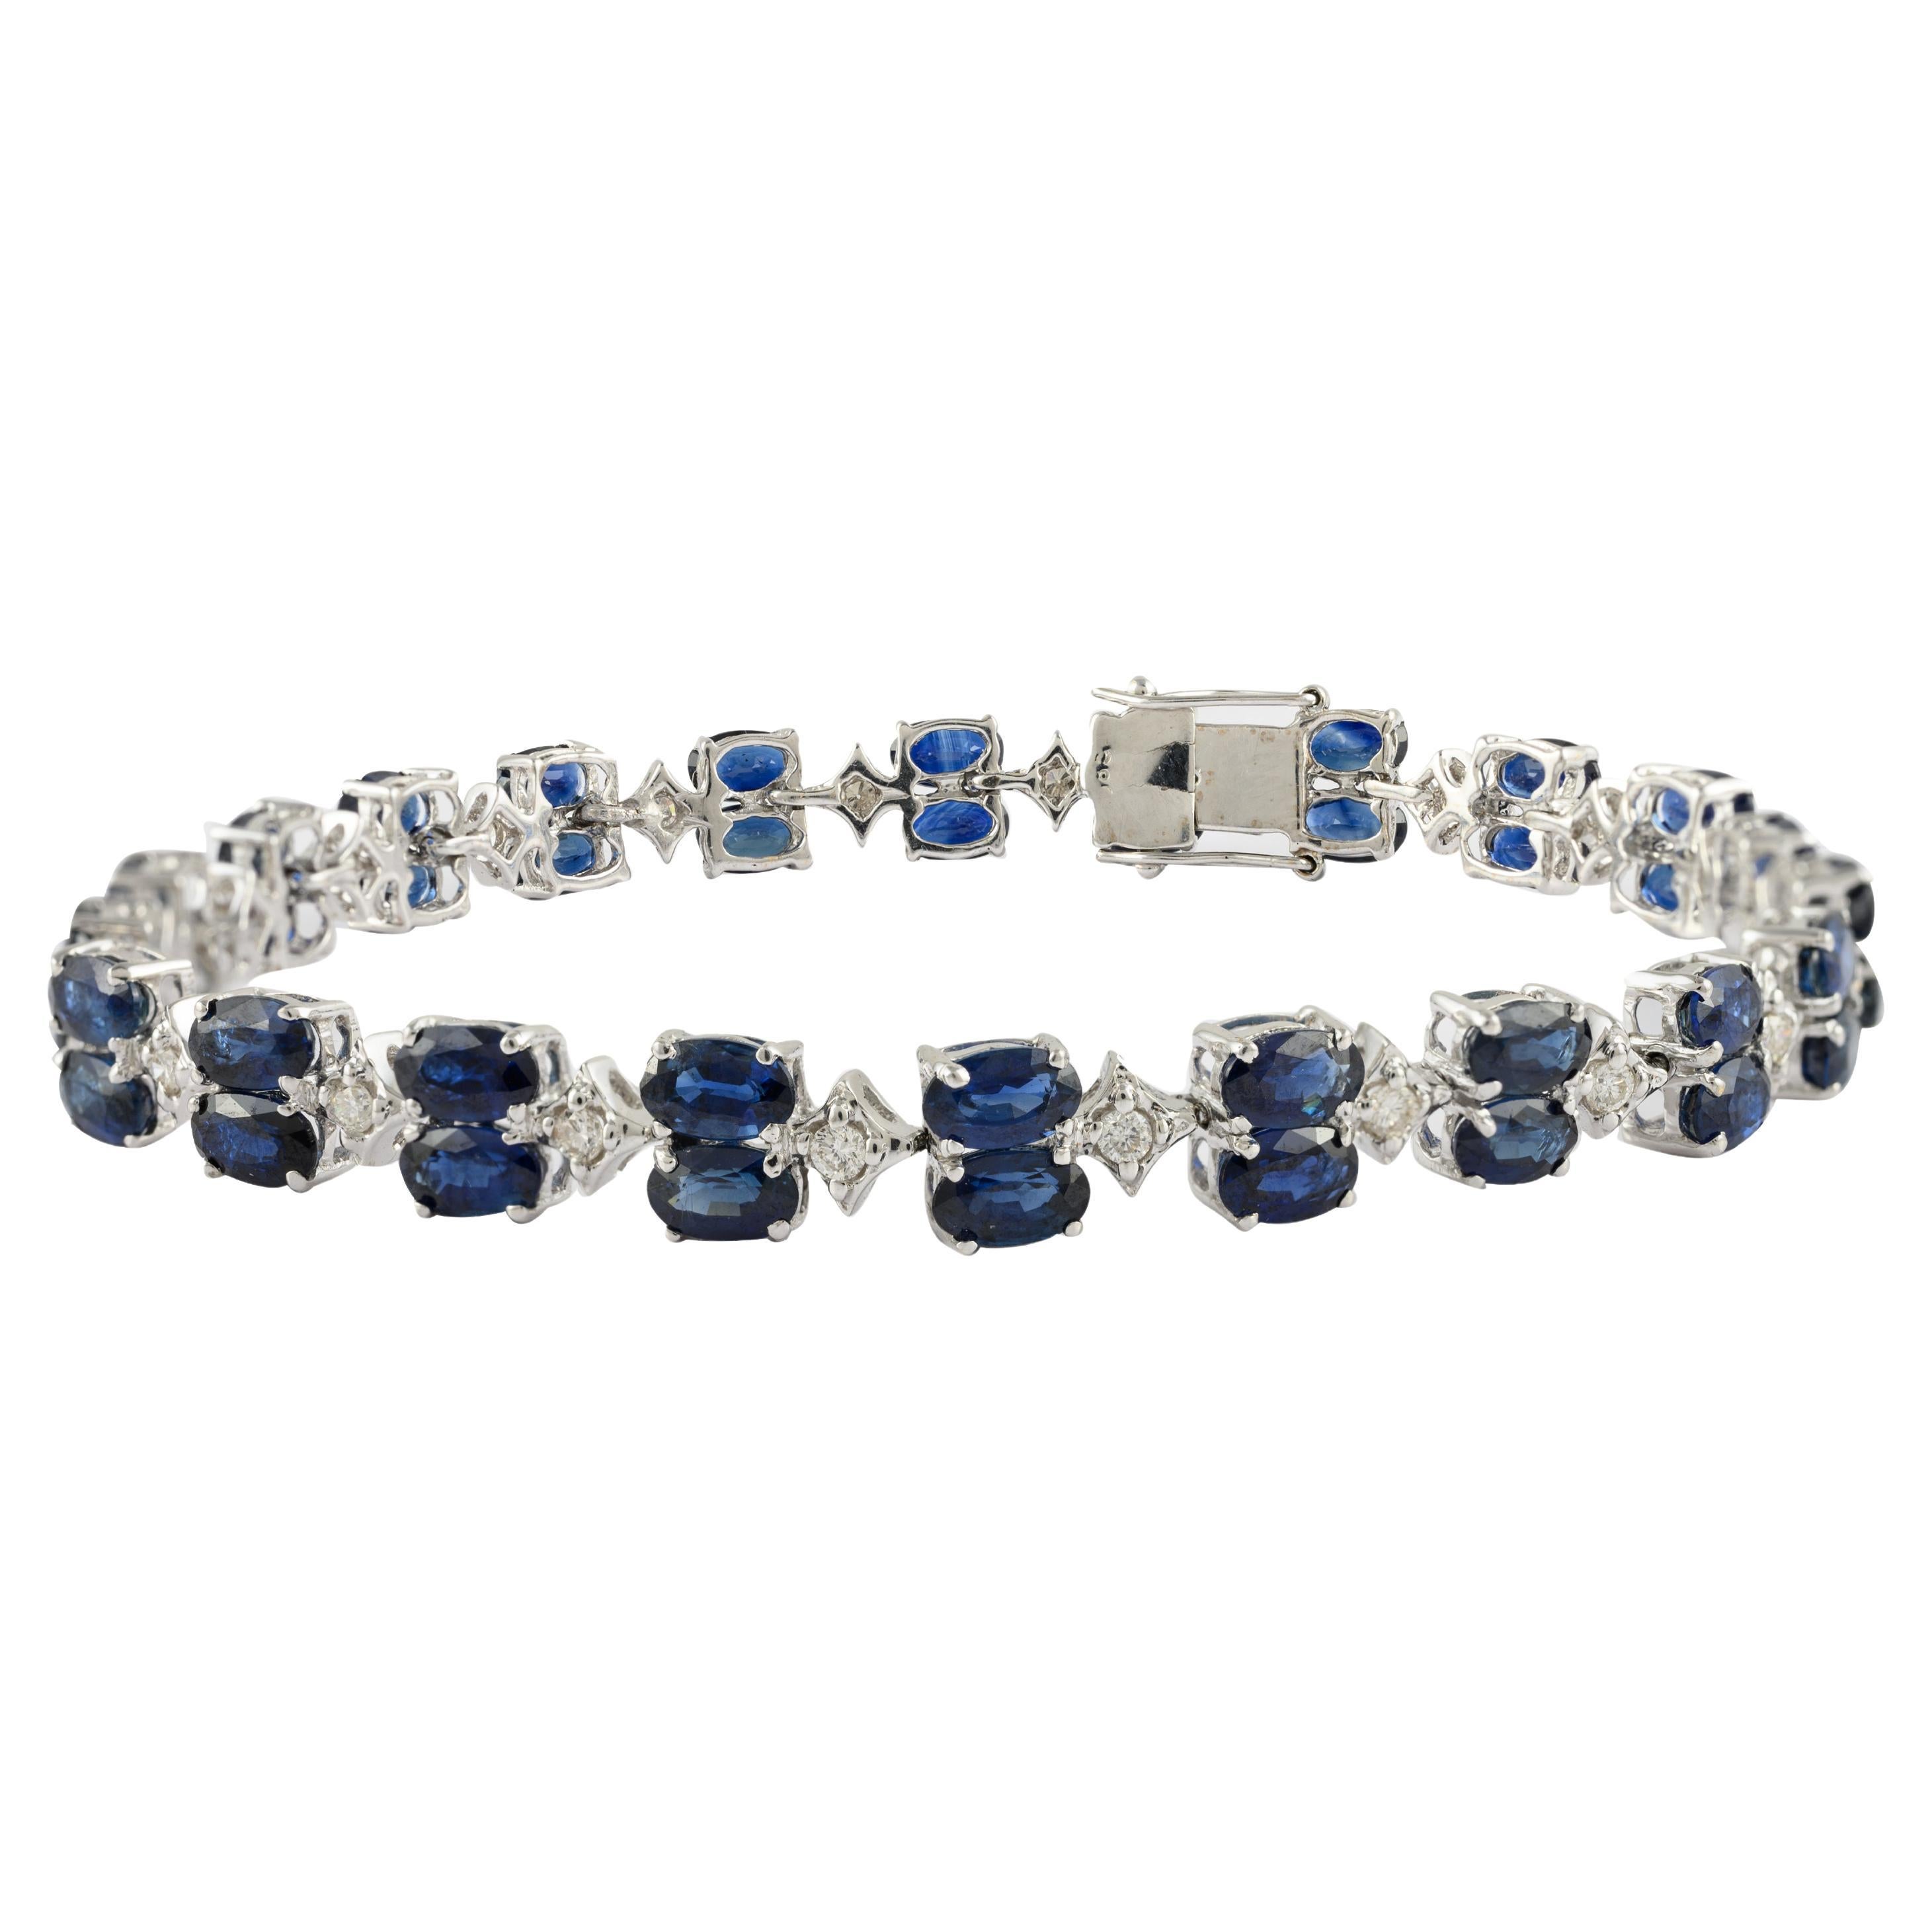 Bracelet de mariage en or blanc massif 14 carats avec saphir bleu de 14,37 carats et diamants